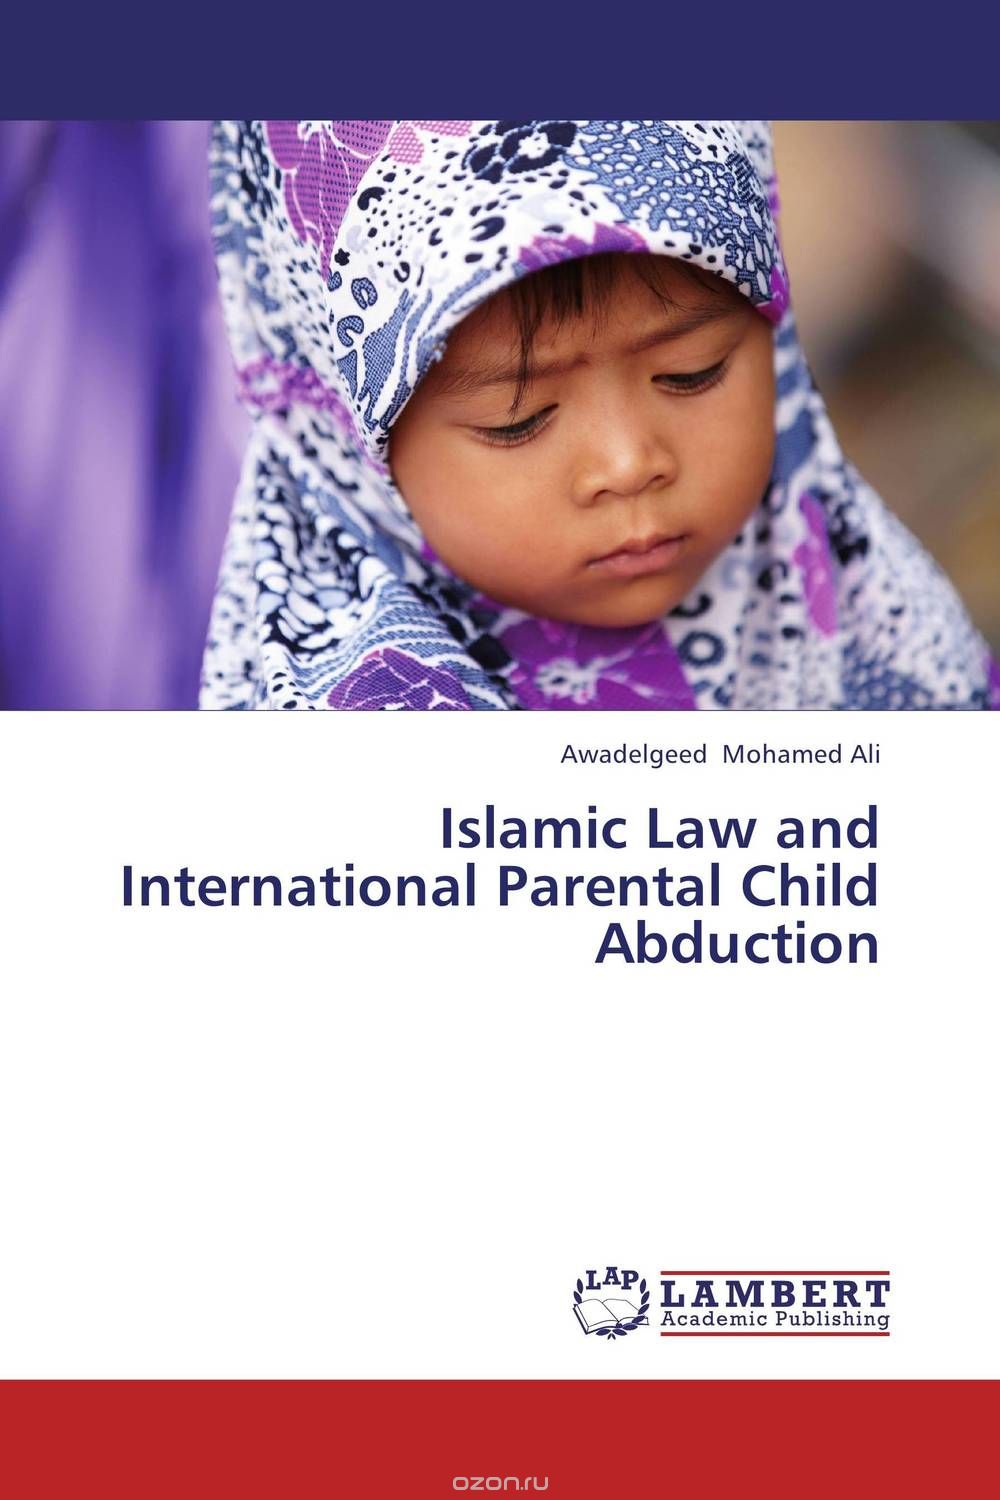 Скачать книгу "Islamic Law and International Parental Child Abduction"